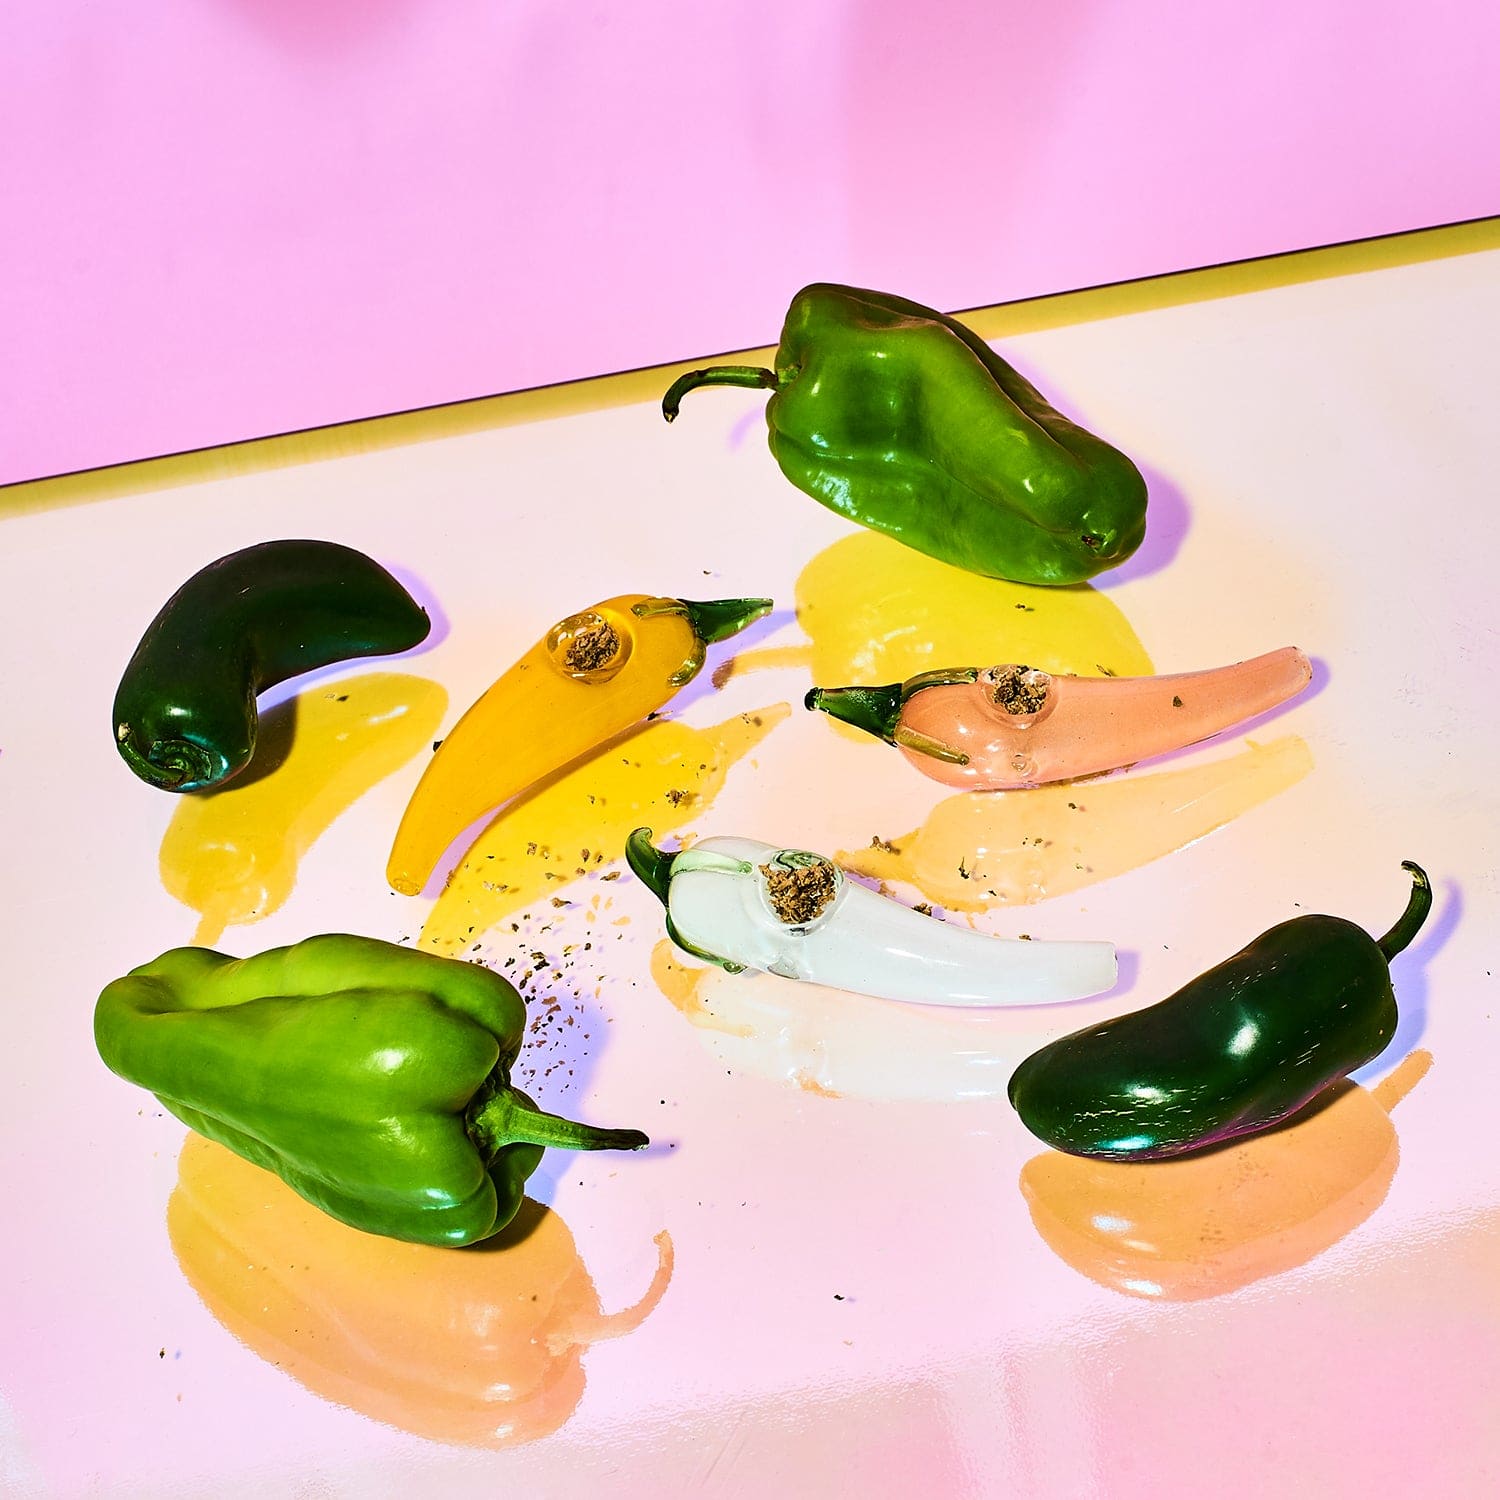 Chili Pepper Spoon 420smoke - Food Novelty